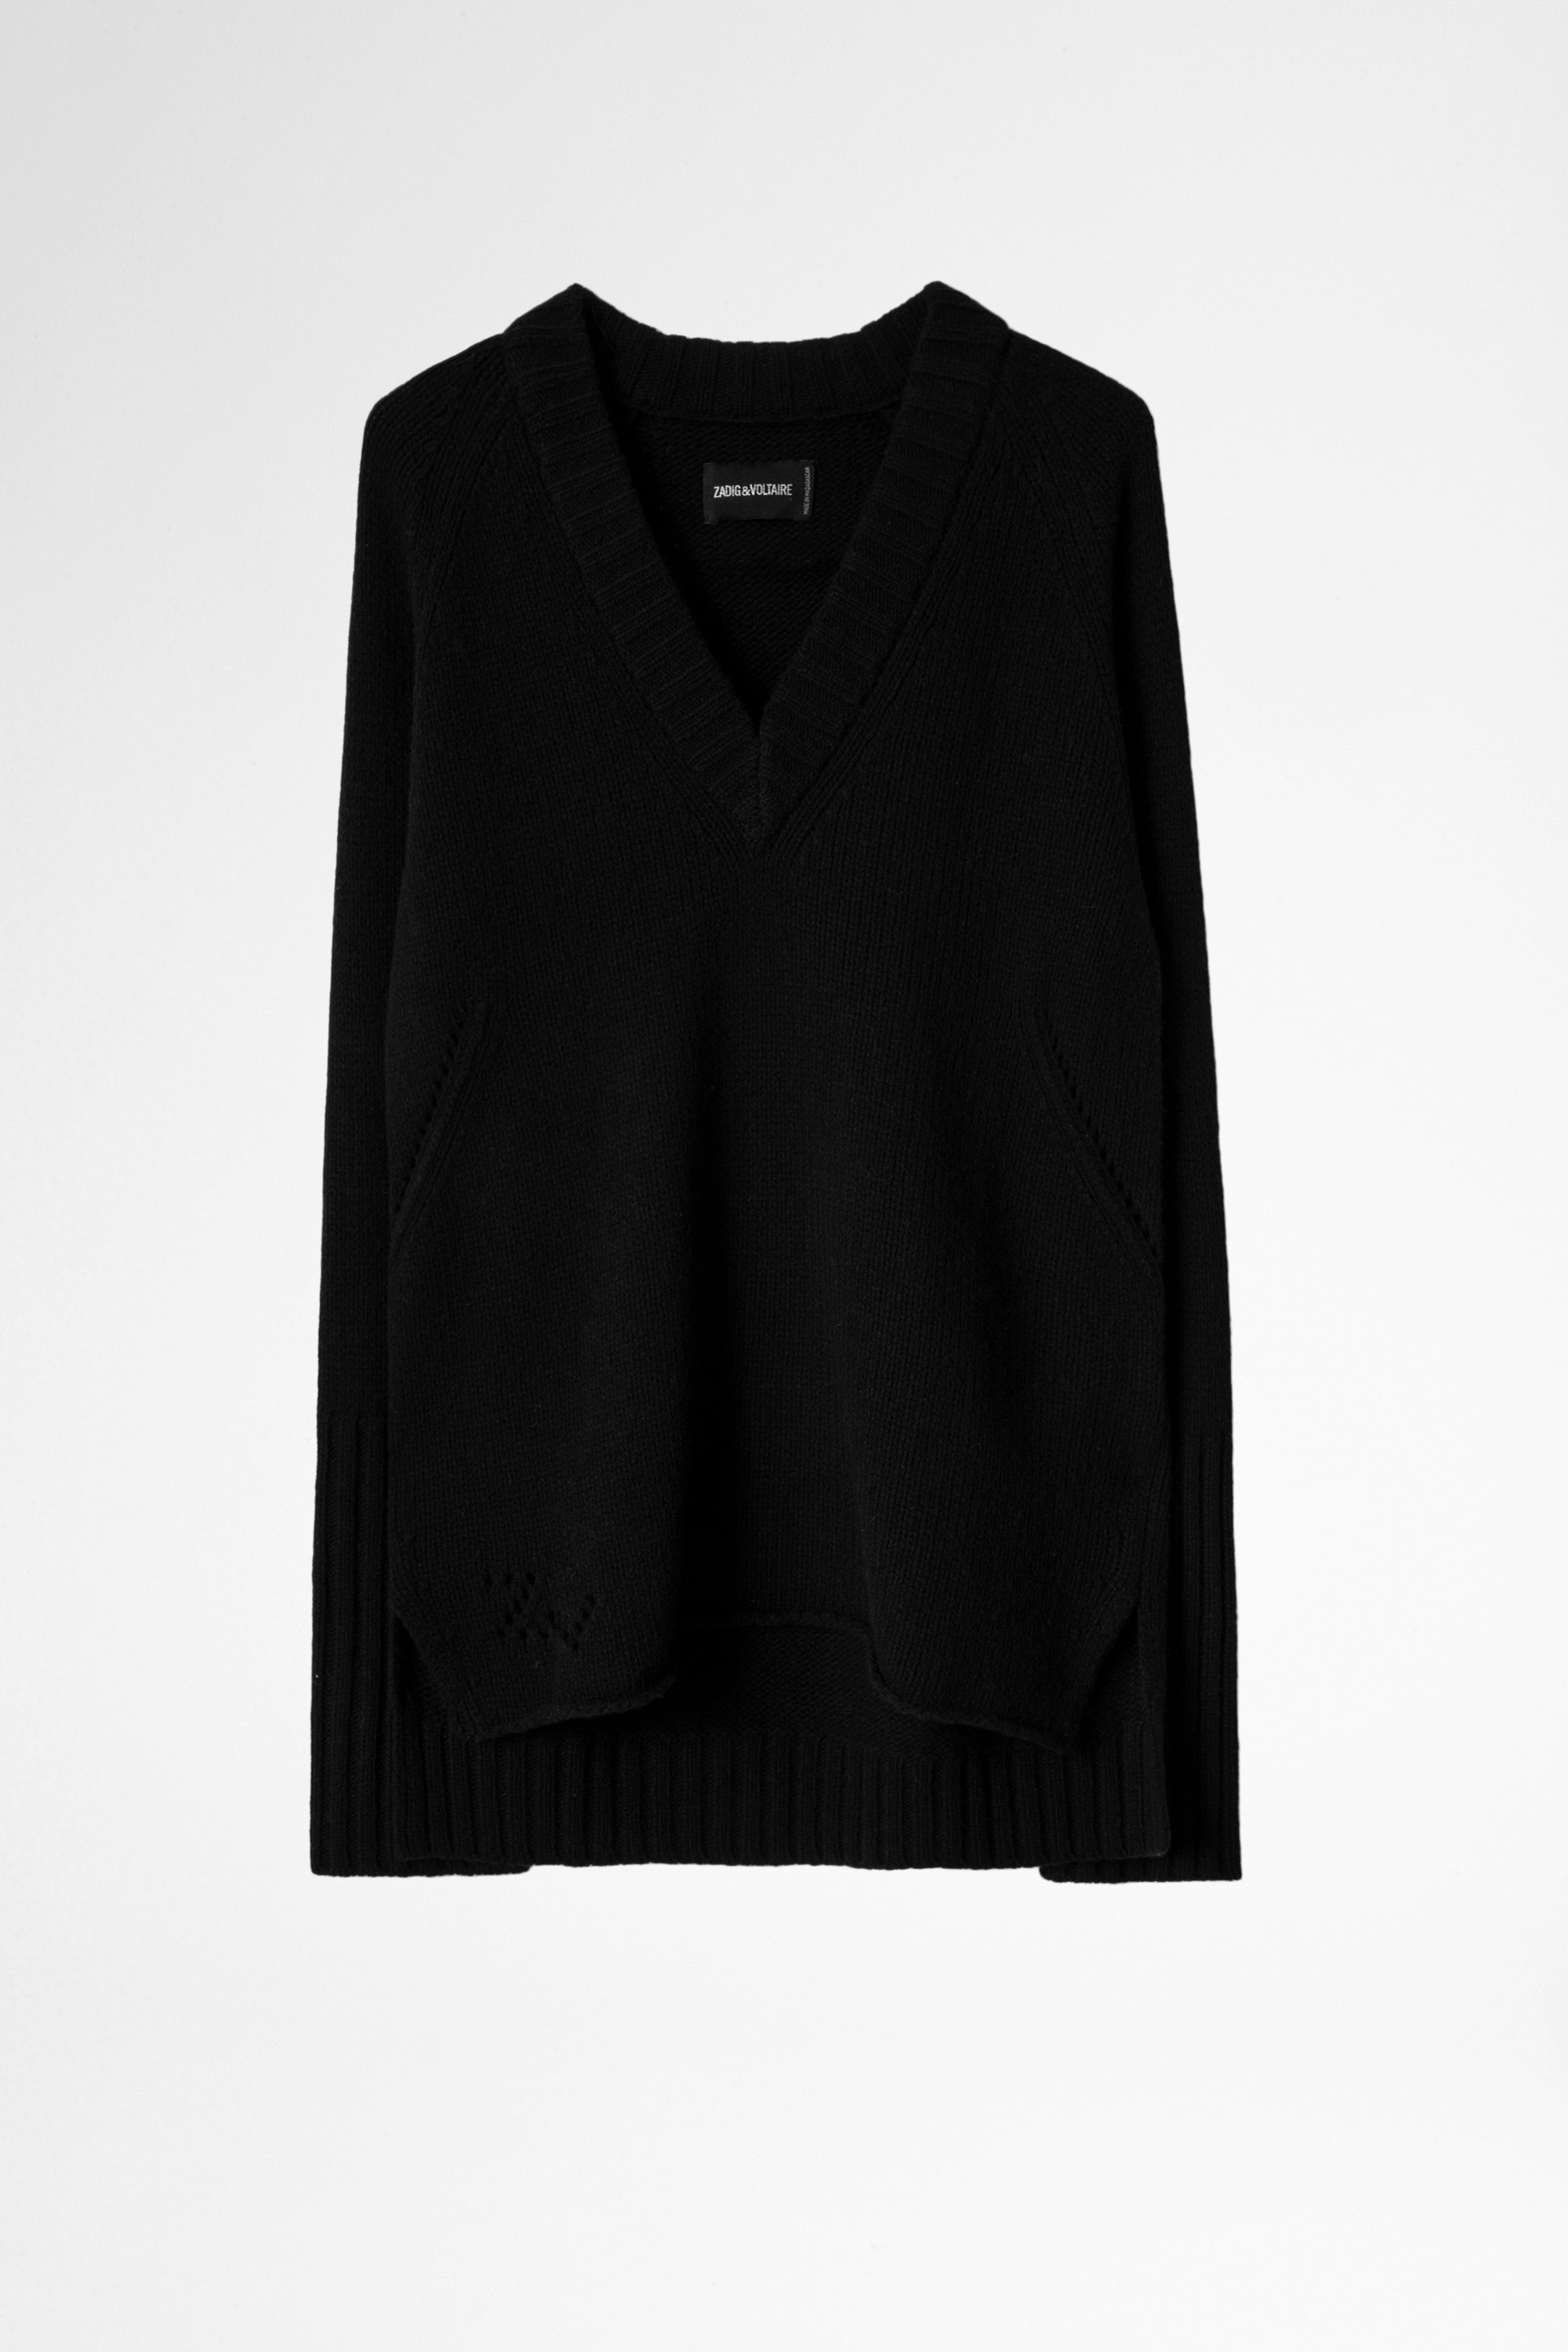 Valmy Sweater Women's black wool ‘J'ai rêvé d'amour’ sweater